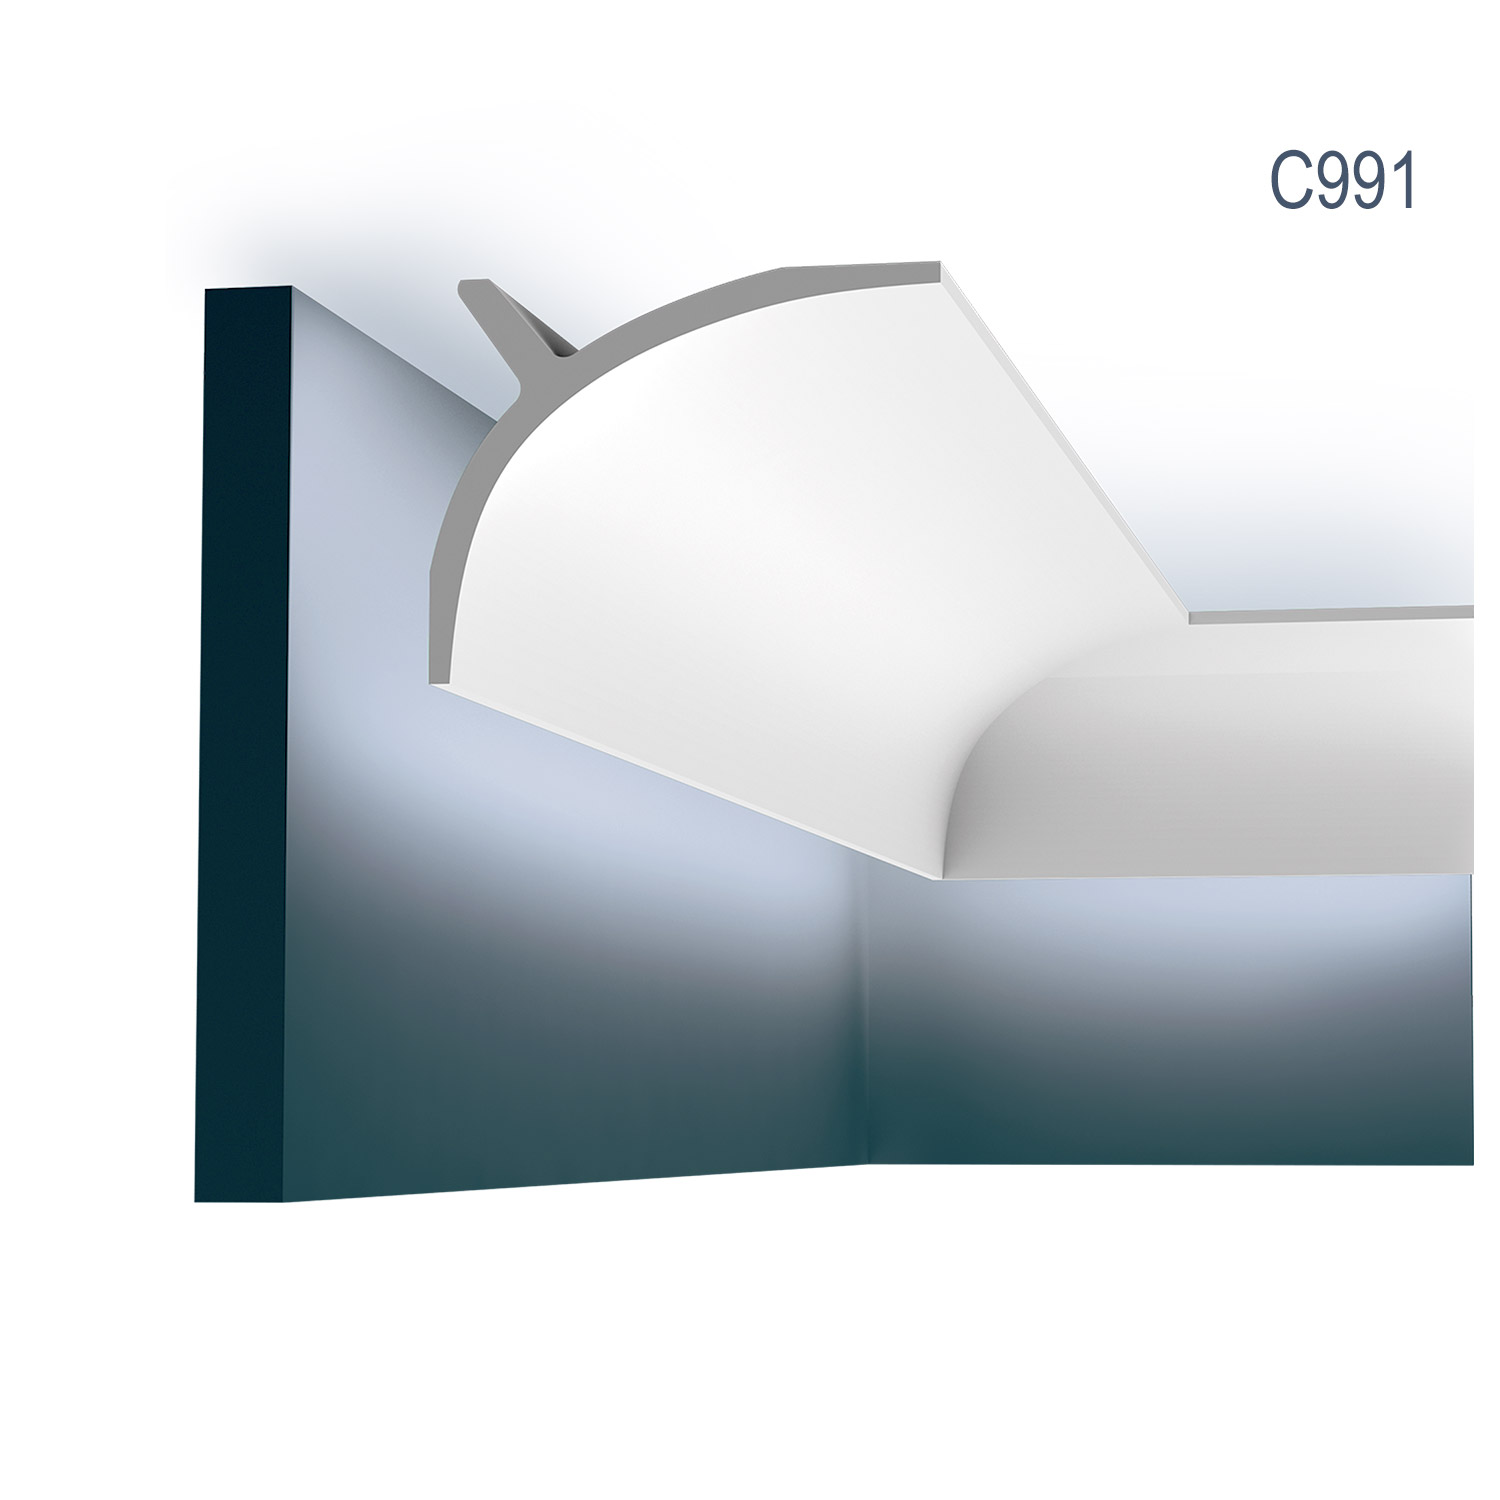 Cornisa C991, profil decorativ pentru LED, pentru tavan, alba, vopsibila, rigida, calitate excelenta, Belgia, din Poliuretan rigid, L 200 x H 11 x L 14 cm